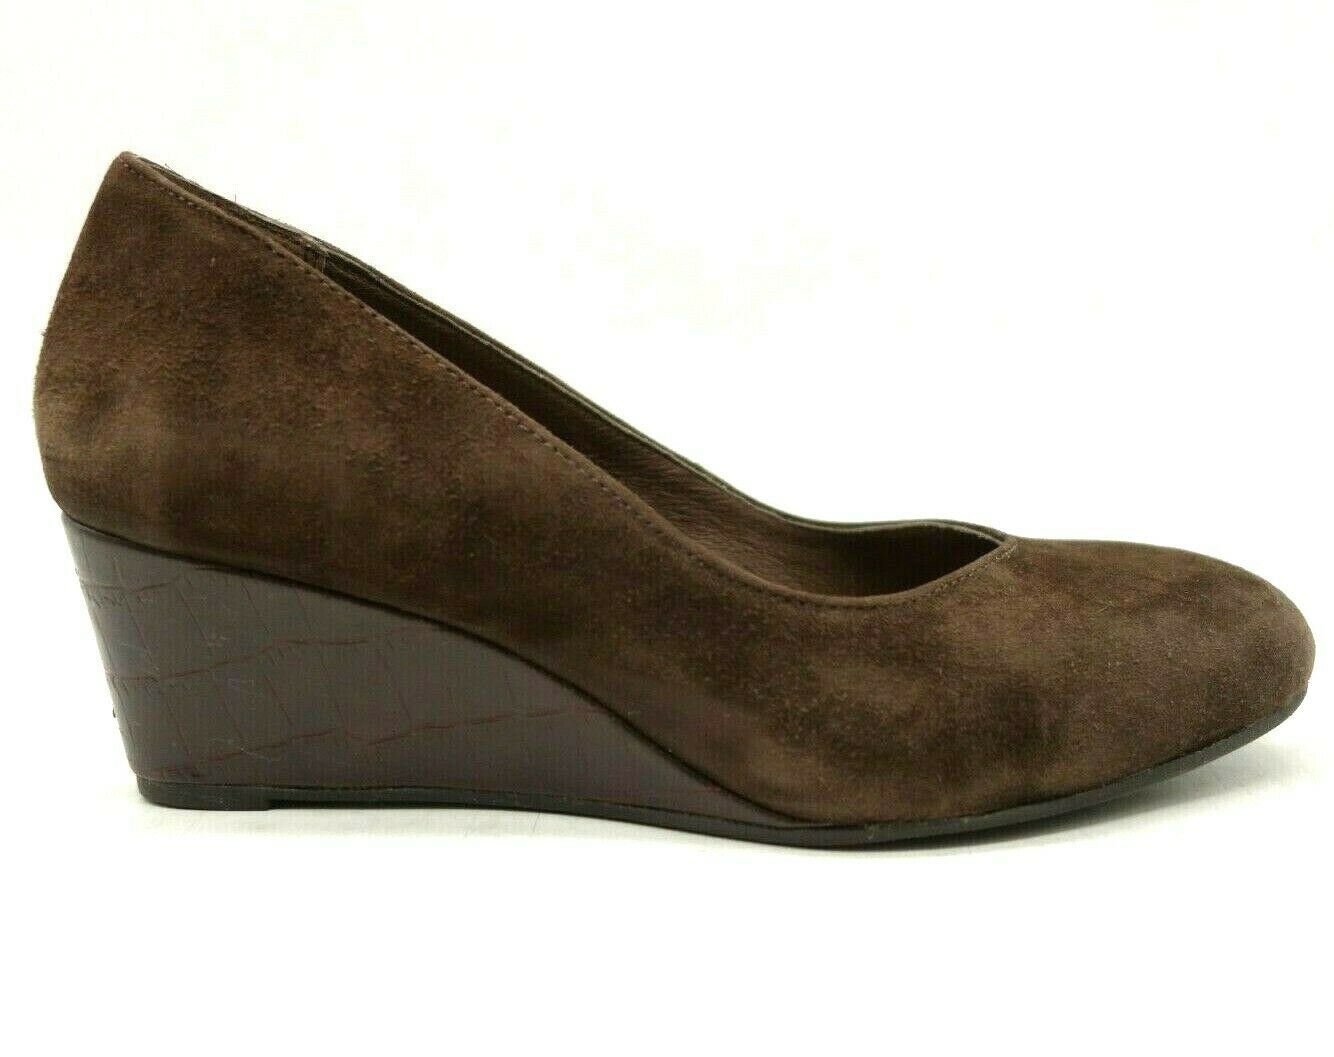 Vionic Antonia Brown Leather Dress Casual Comfort Wedge Heels Shoes Women's 6